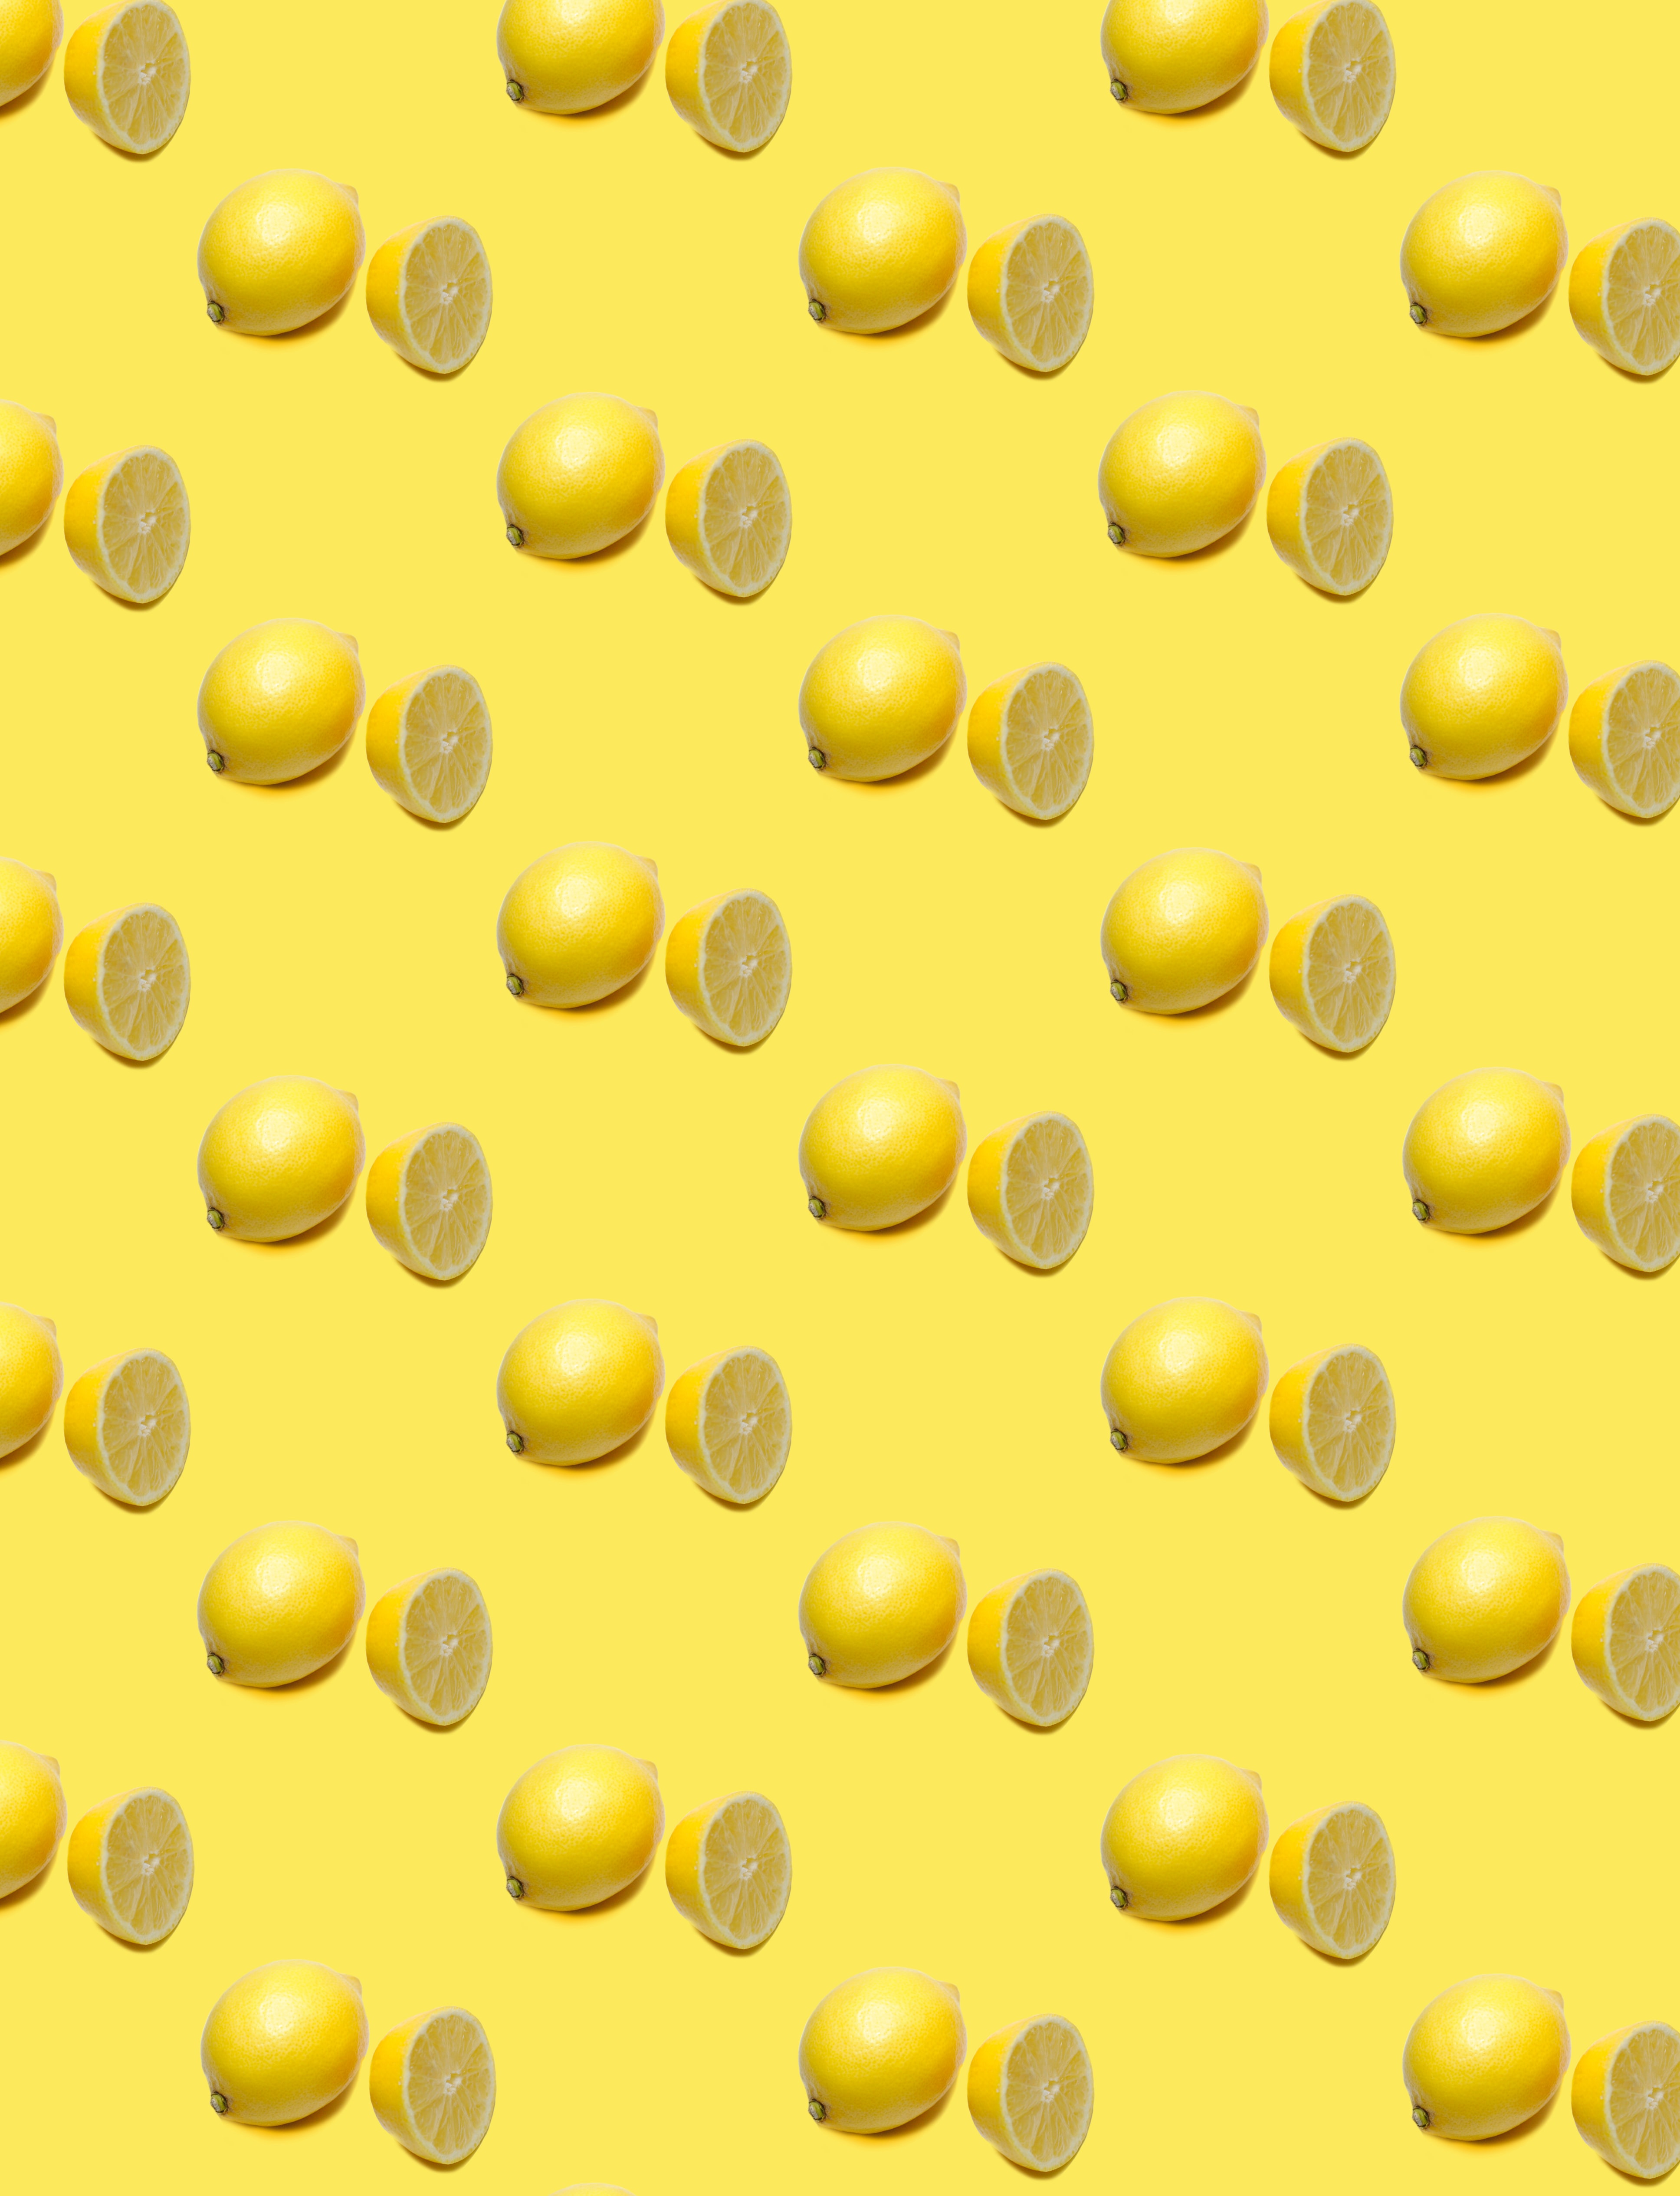 86483 descargar imagen lemons, amarillo, patrón, textura, texturas, agrios, citrus: fondos de pantalla y protectores de pantalla gratis